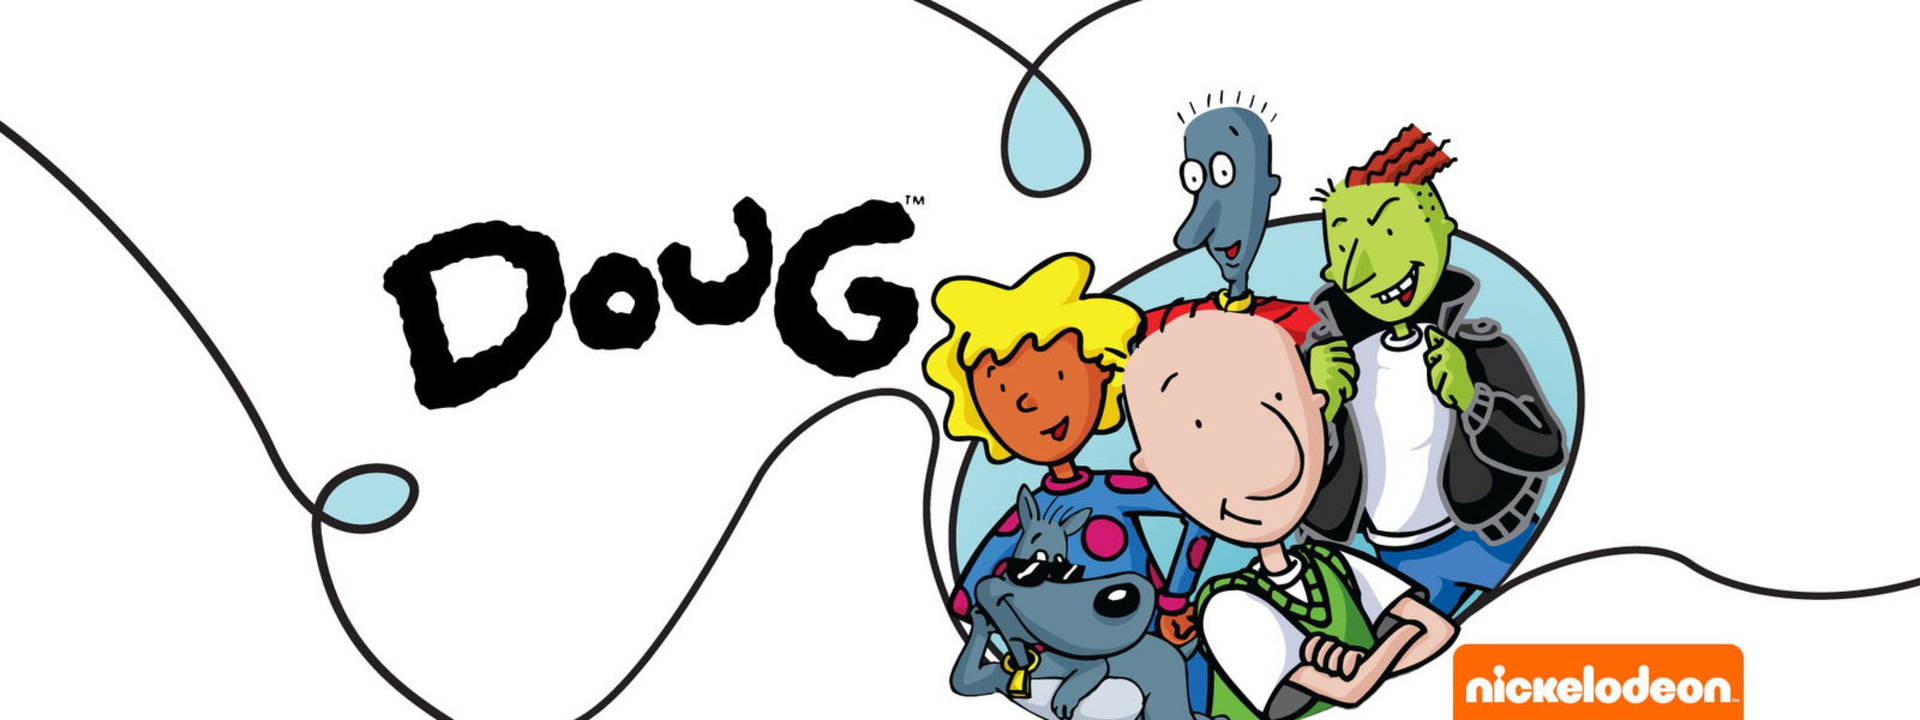 Doug Nickelodeon Poster